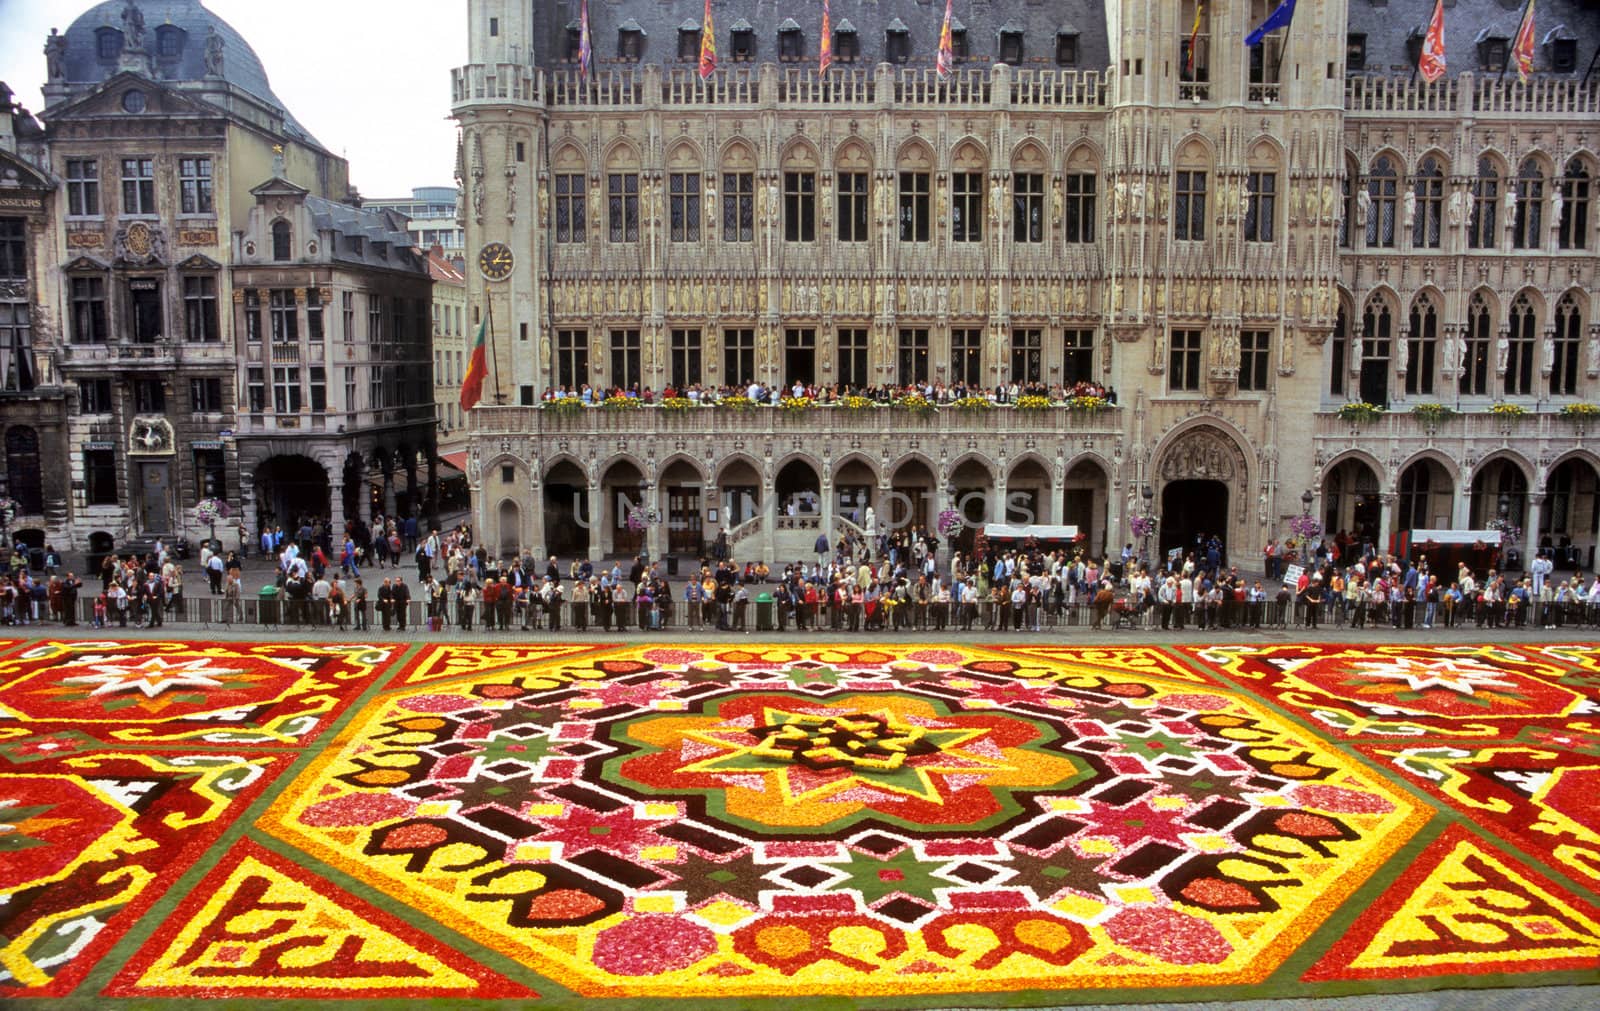 Flower Carpet in Grande Place by ACMPhoto